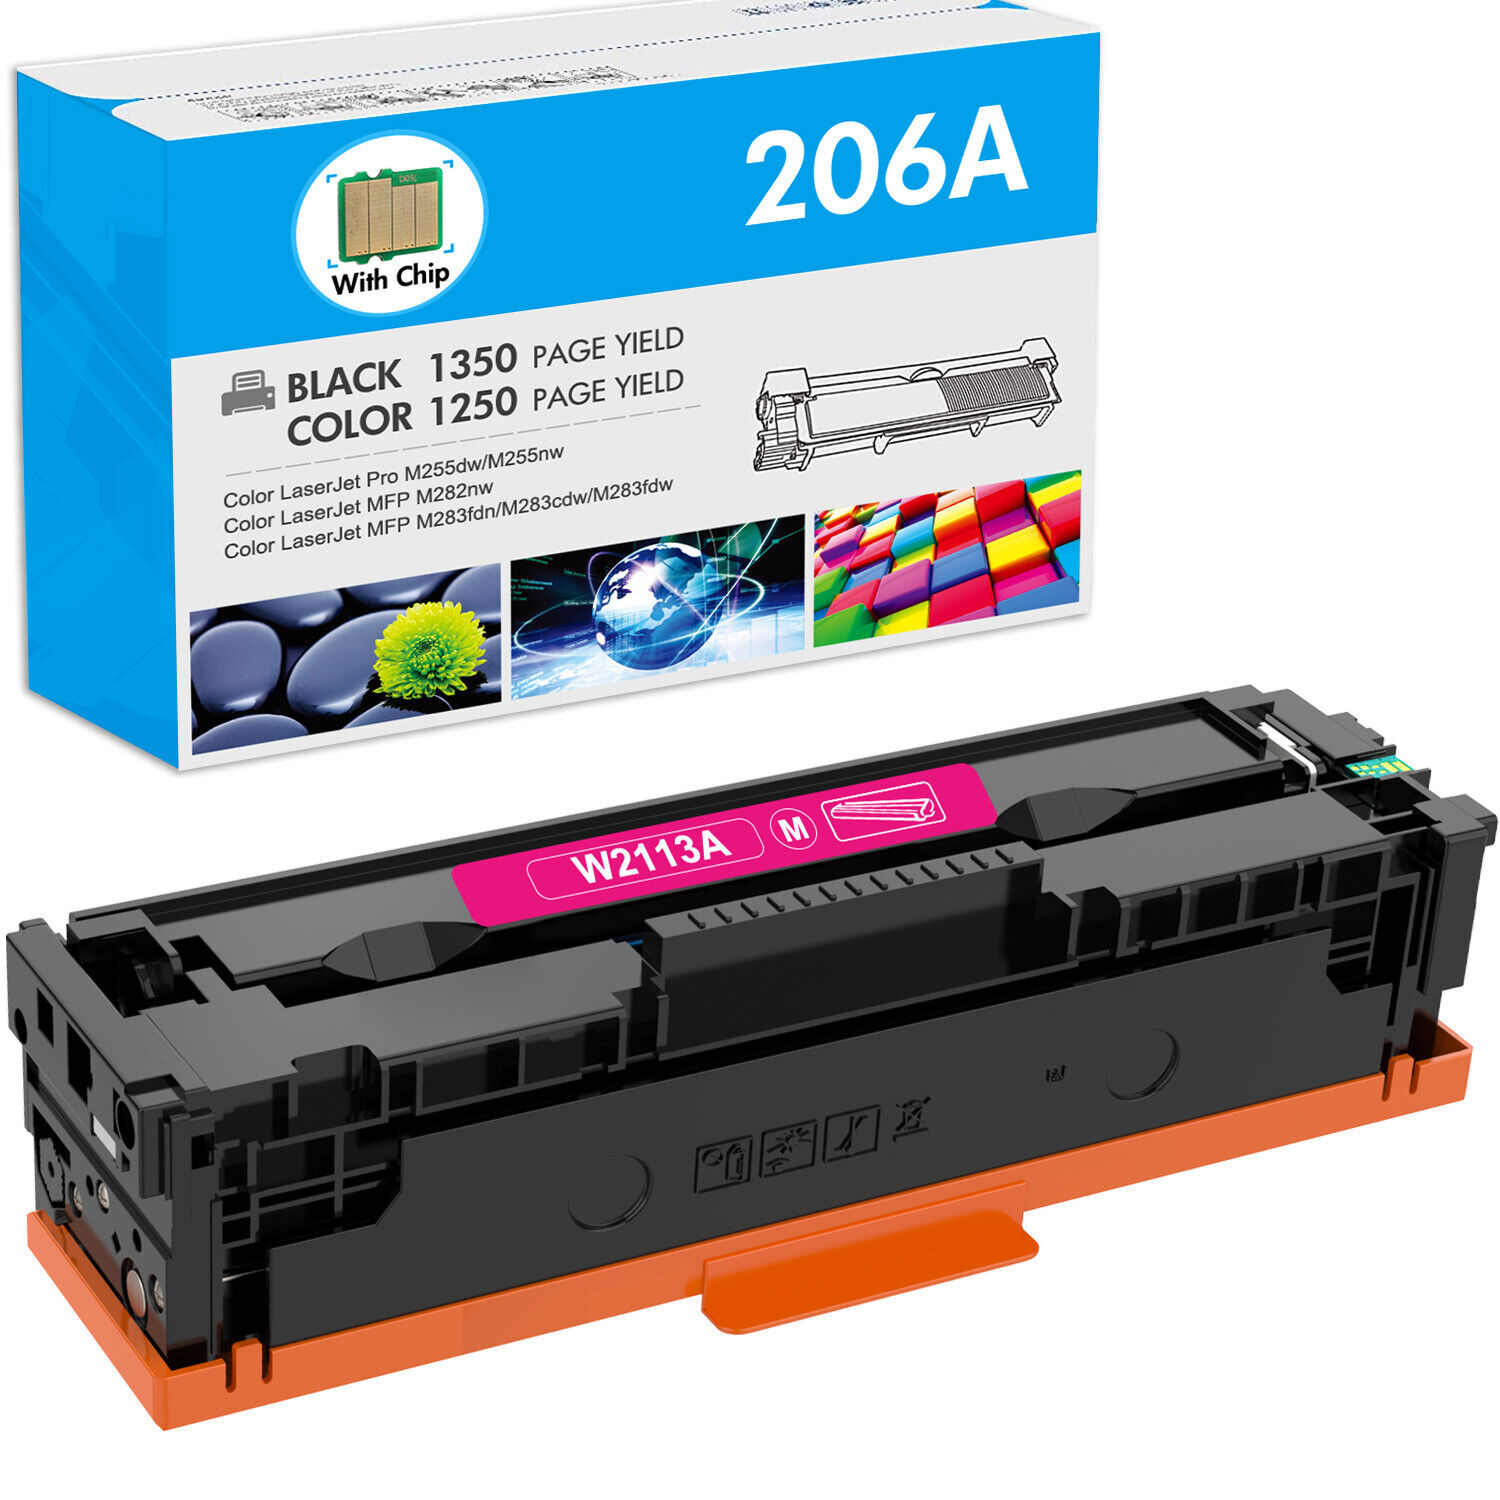 With Chip W2110A Toner for HP 206A Color Laserjet Pro M283cdw M255dw M282 Lot